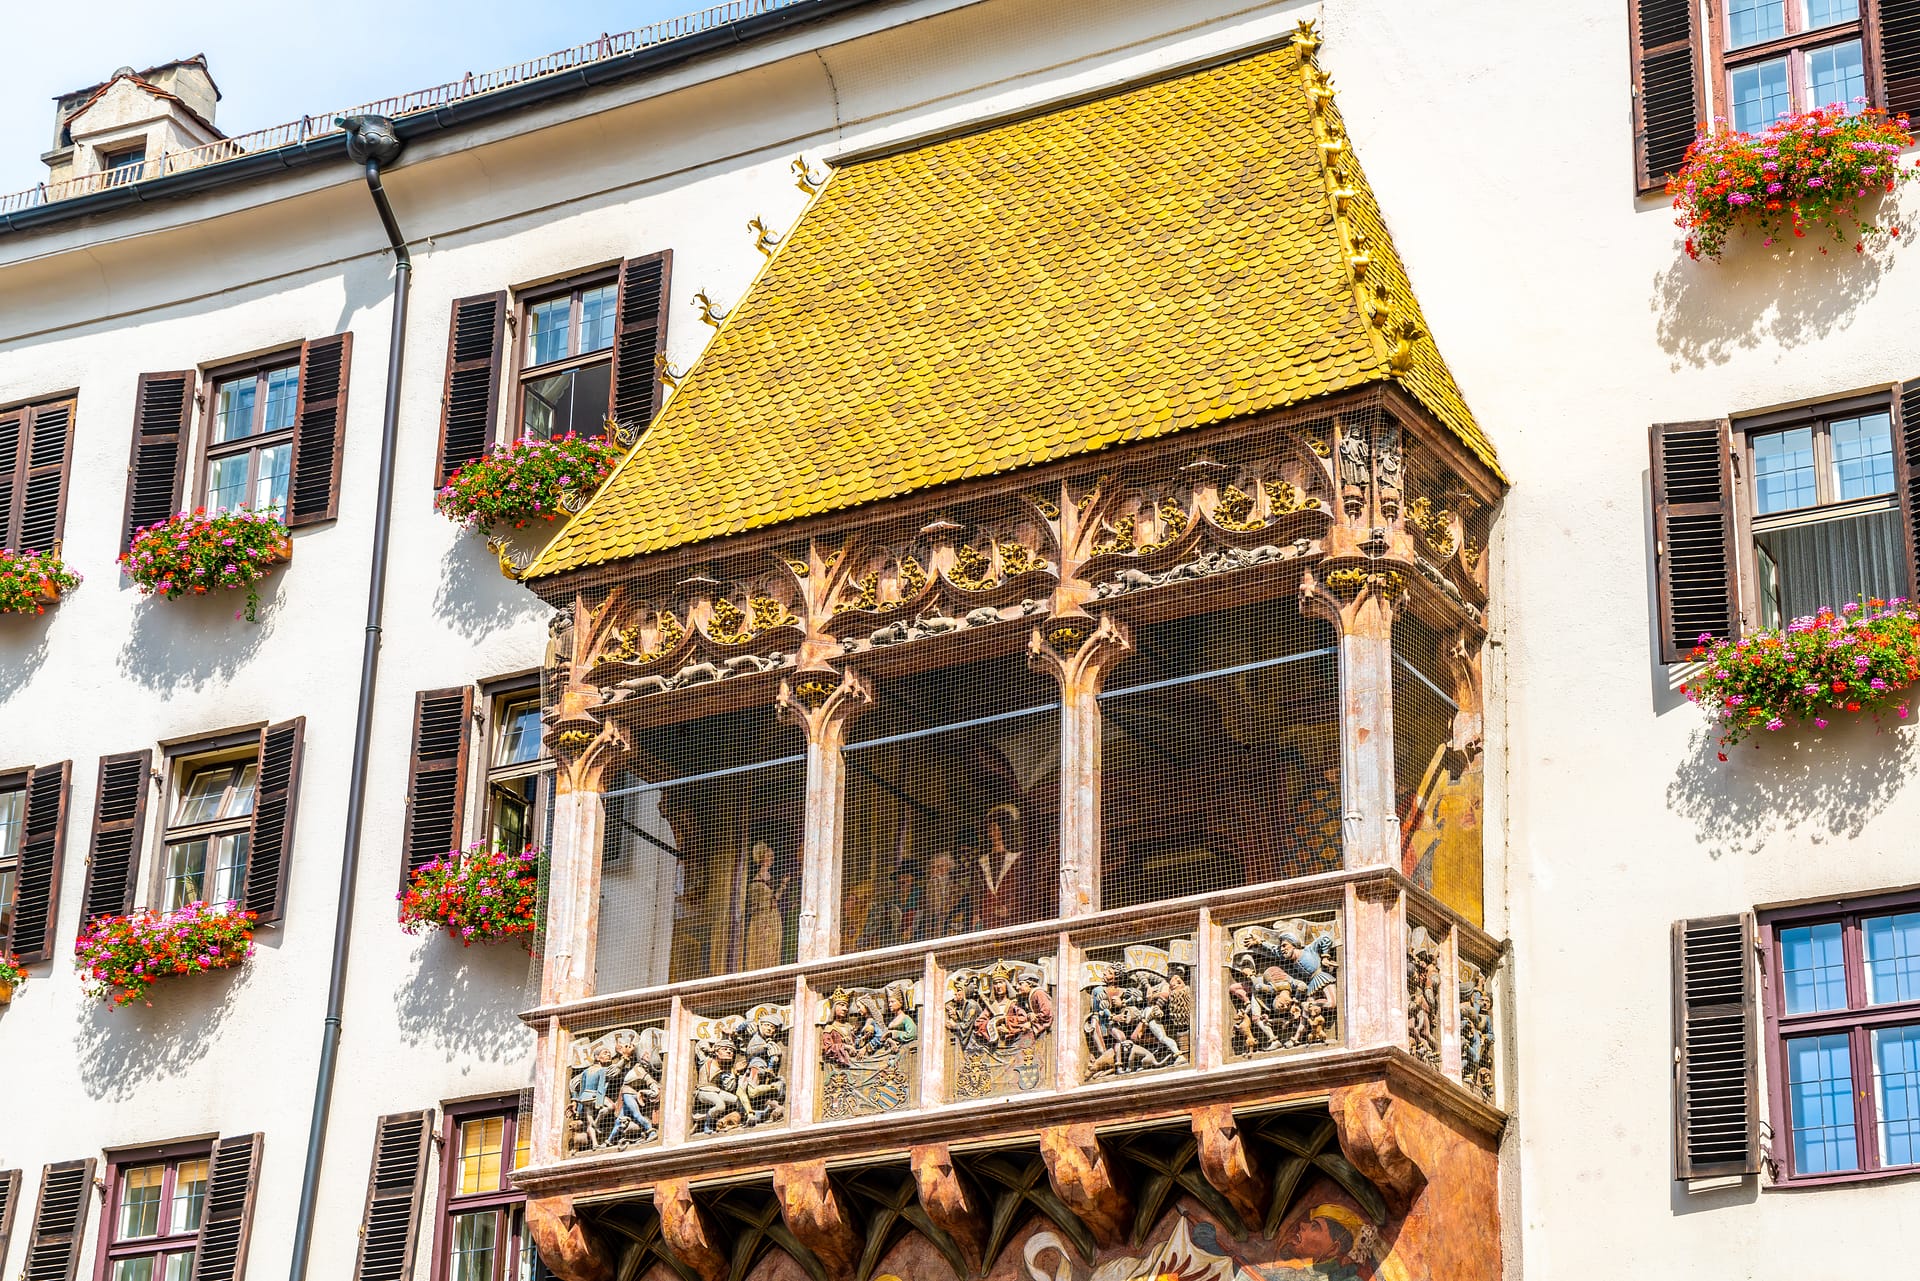 Goldenes Dachl at Innsbruck in Austria.